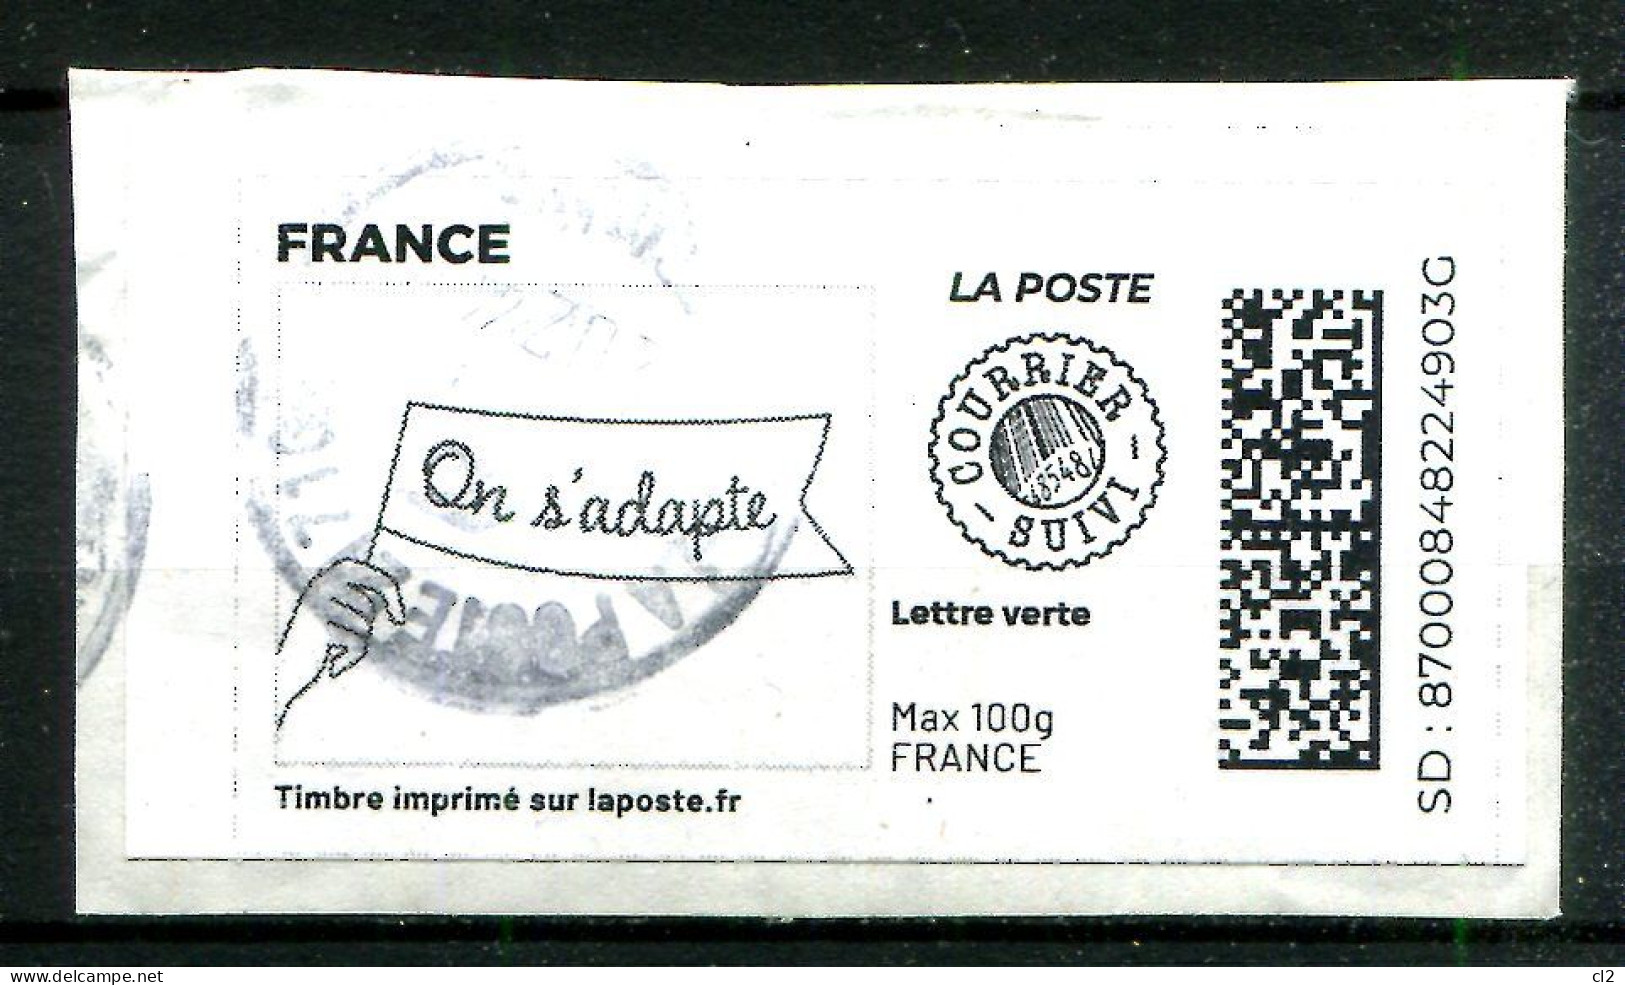 FRANCE - Timbre à Imprimer - Lettre Verte Suivie Max 100g - On S'adapte - Francobolli Stampabili (Montimbrenligne)